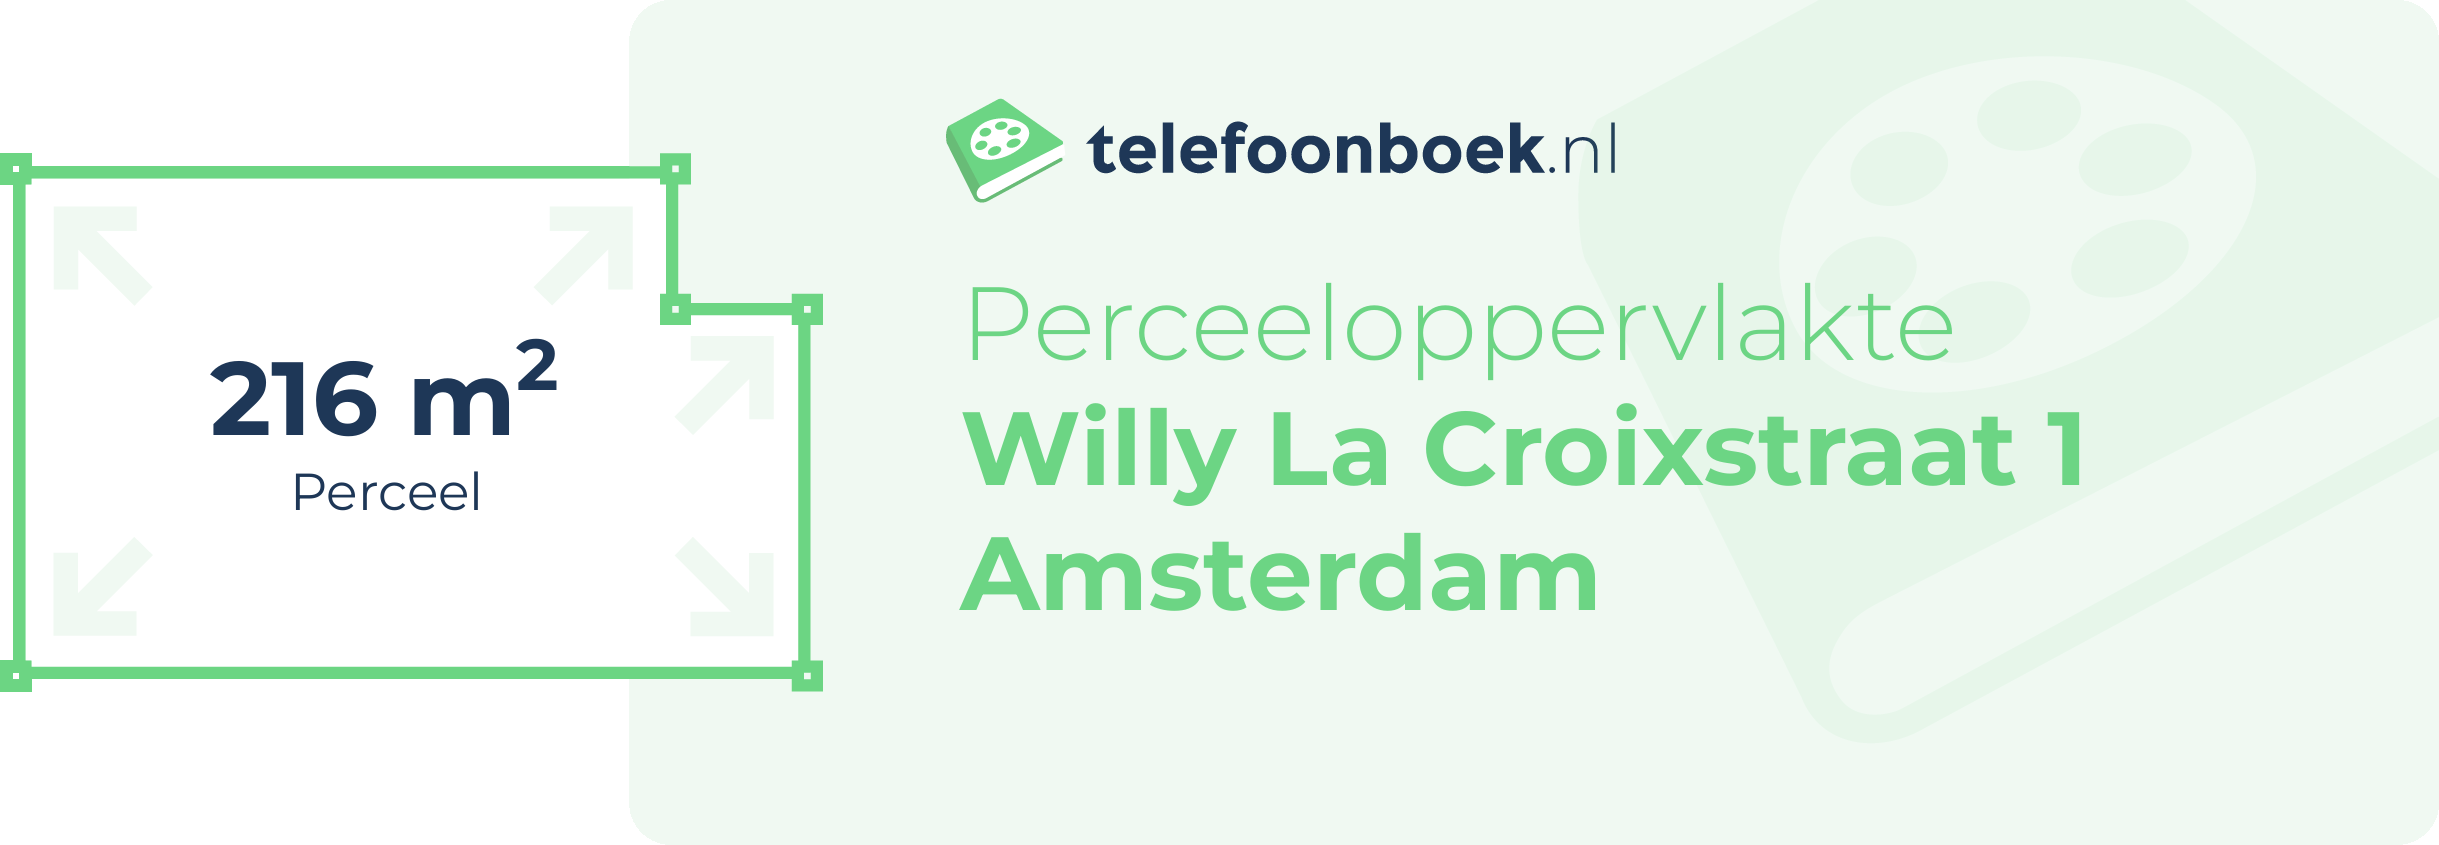 Perceeloppervlakte Willy La Croixstraat 1 Amsterdam